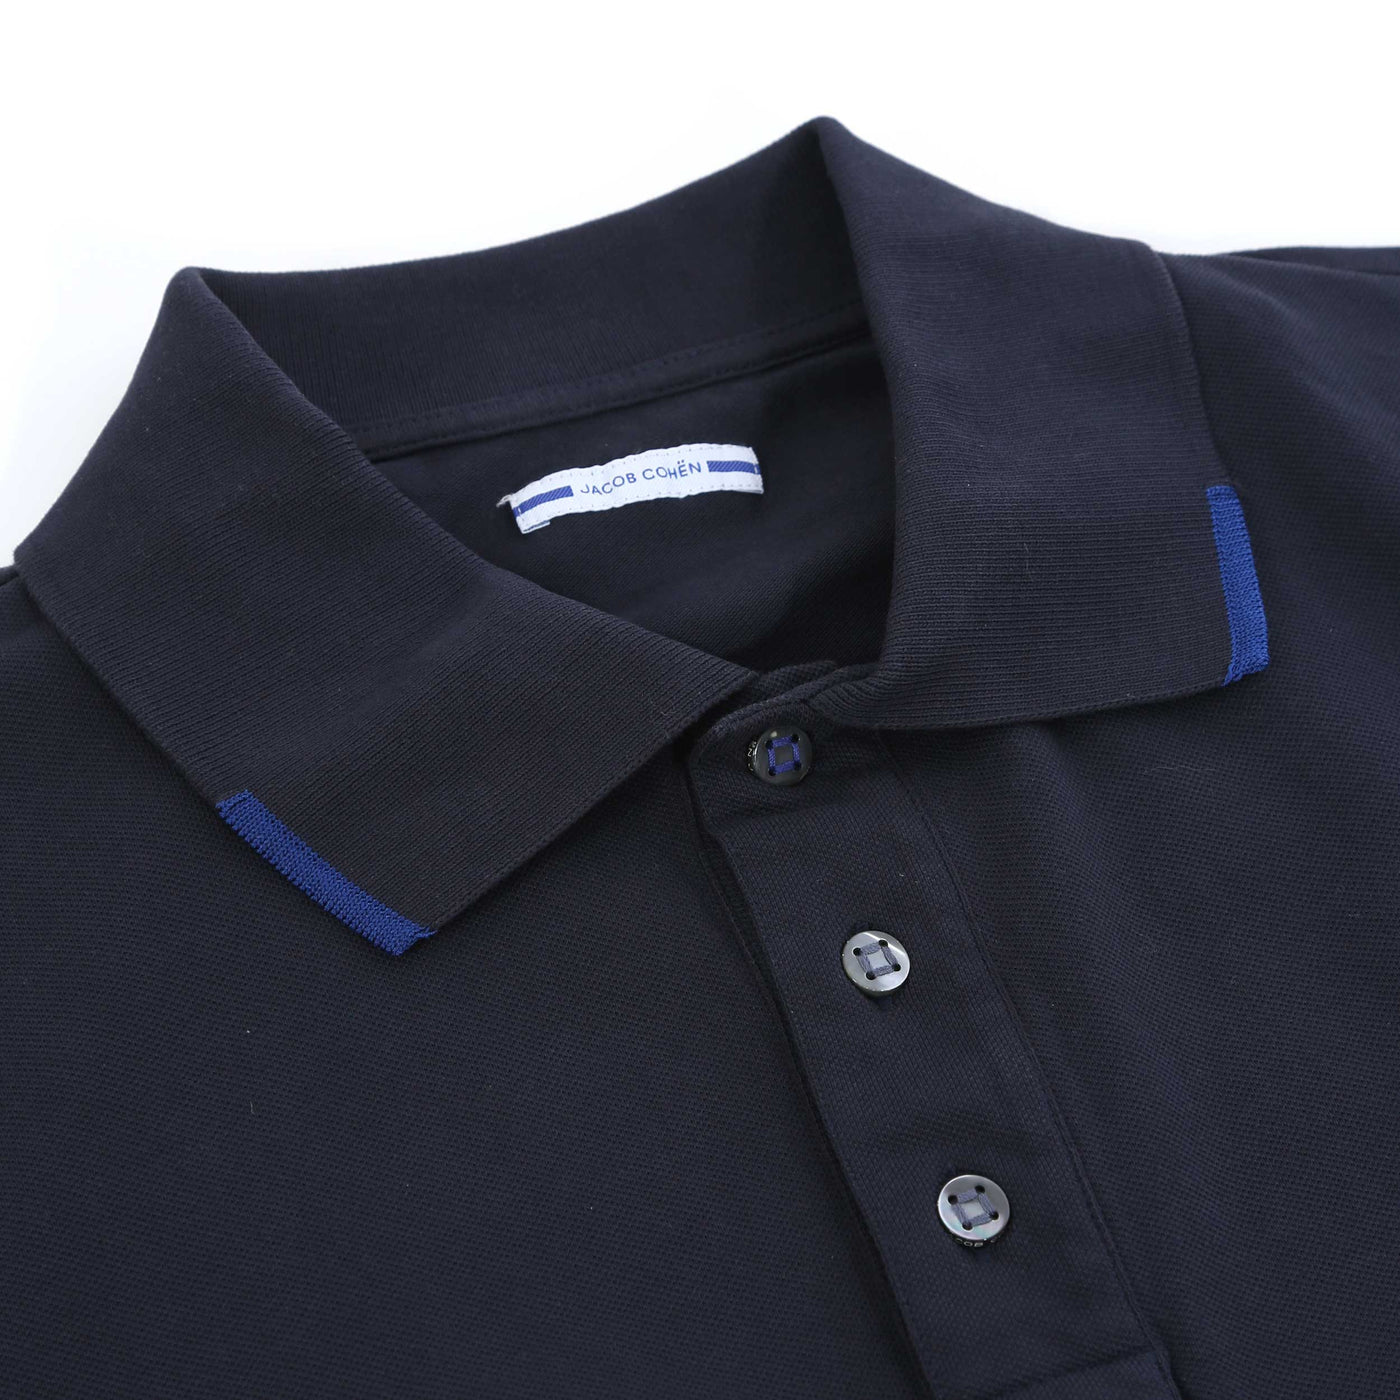 Jacob Cohen Tipped Polo Shirt in Navy Collar